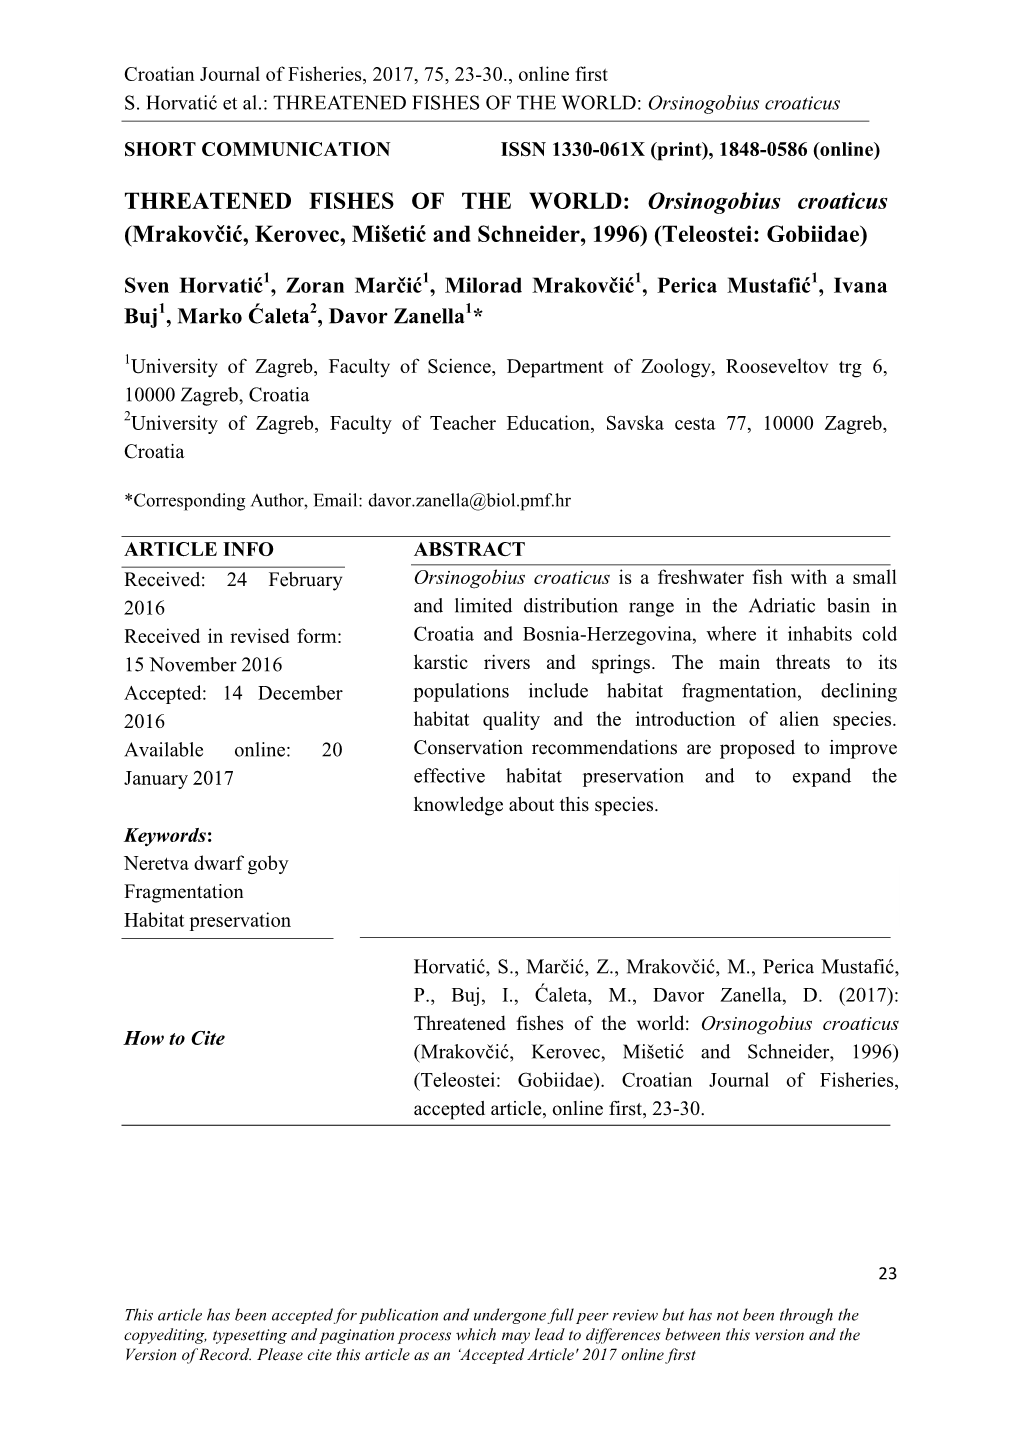 SHORT COMMUNICATION ISSN 1330-061X (Print), 1848-0586 (Online)